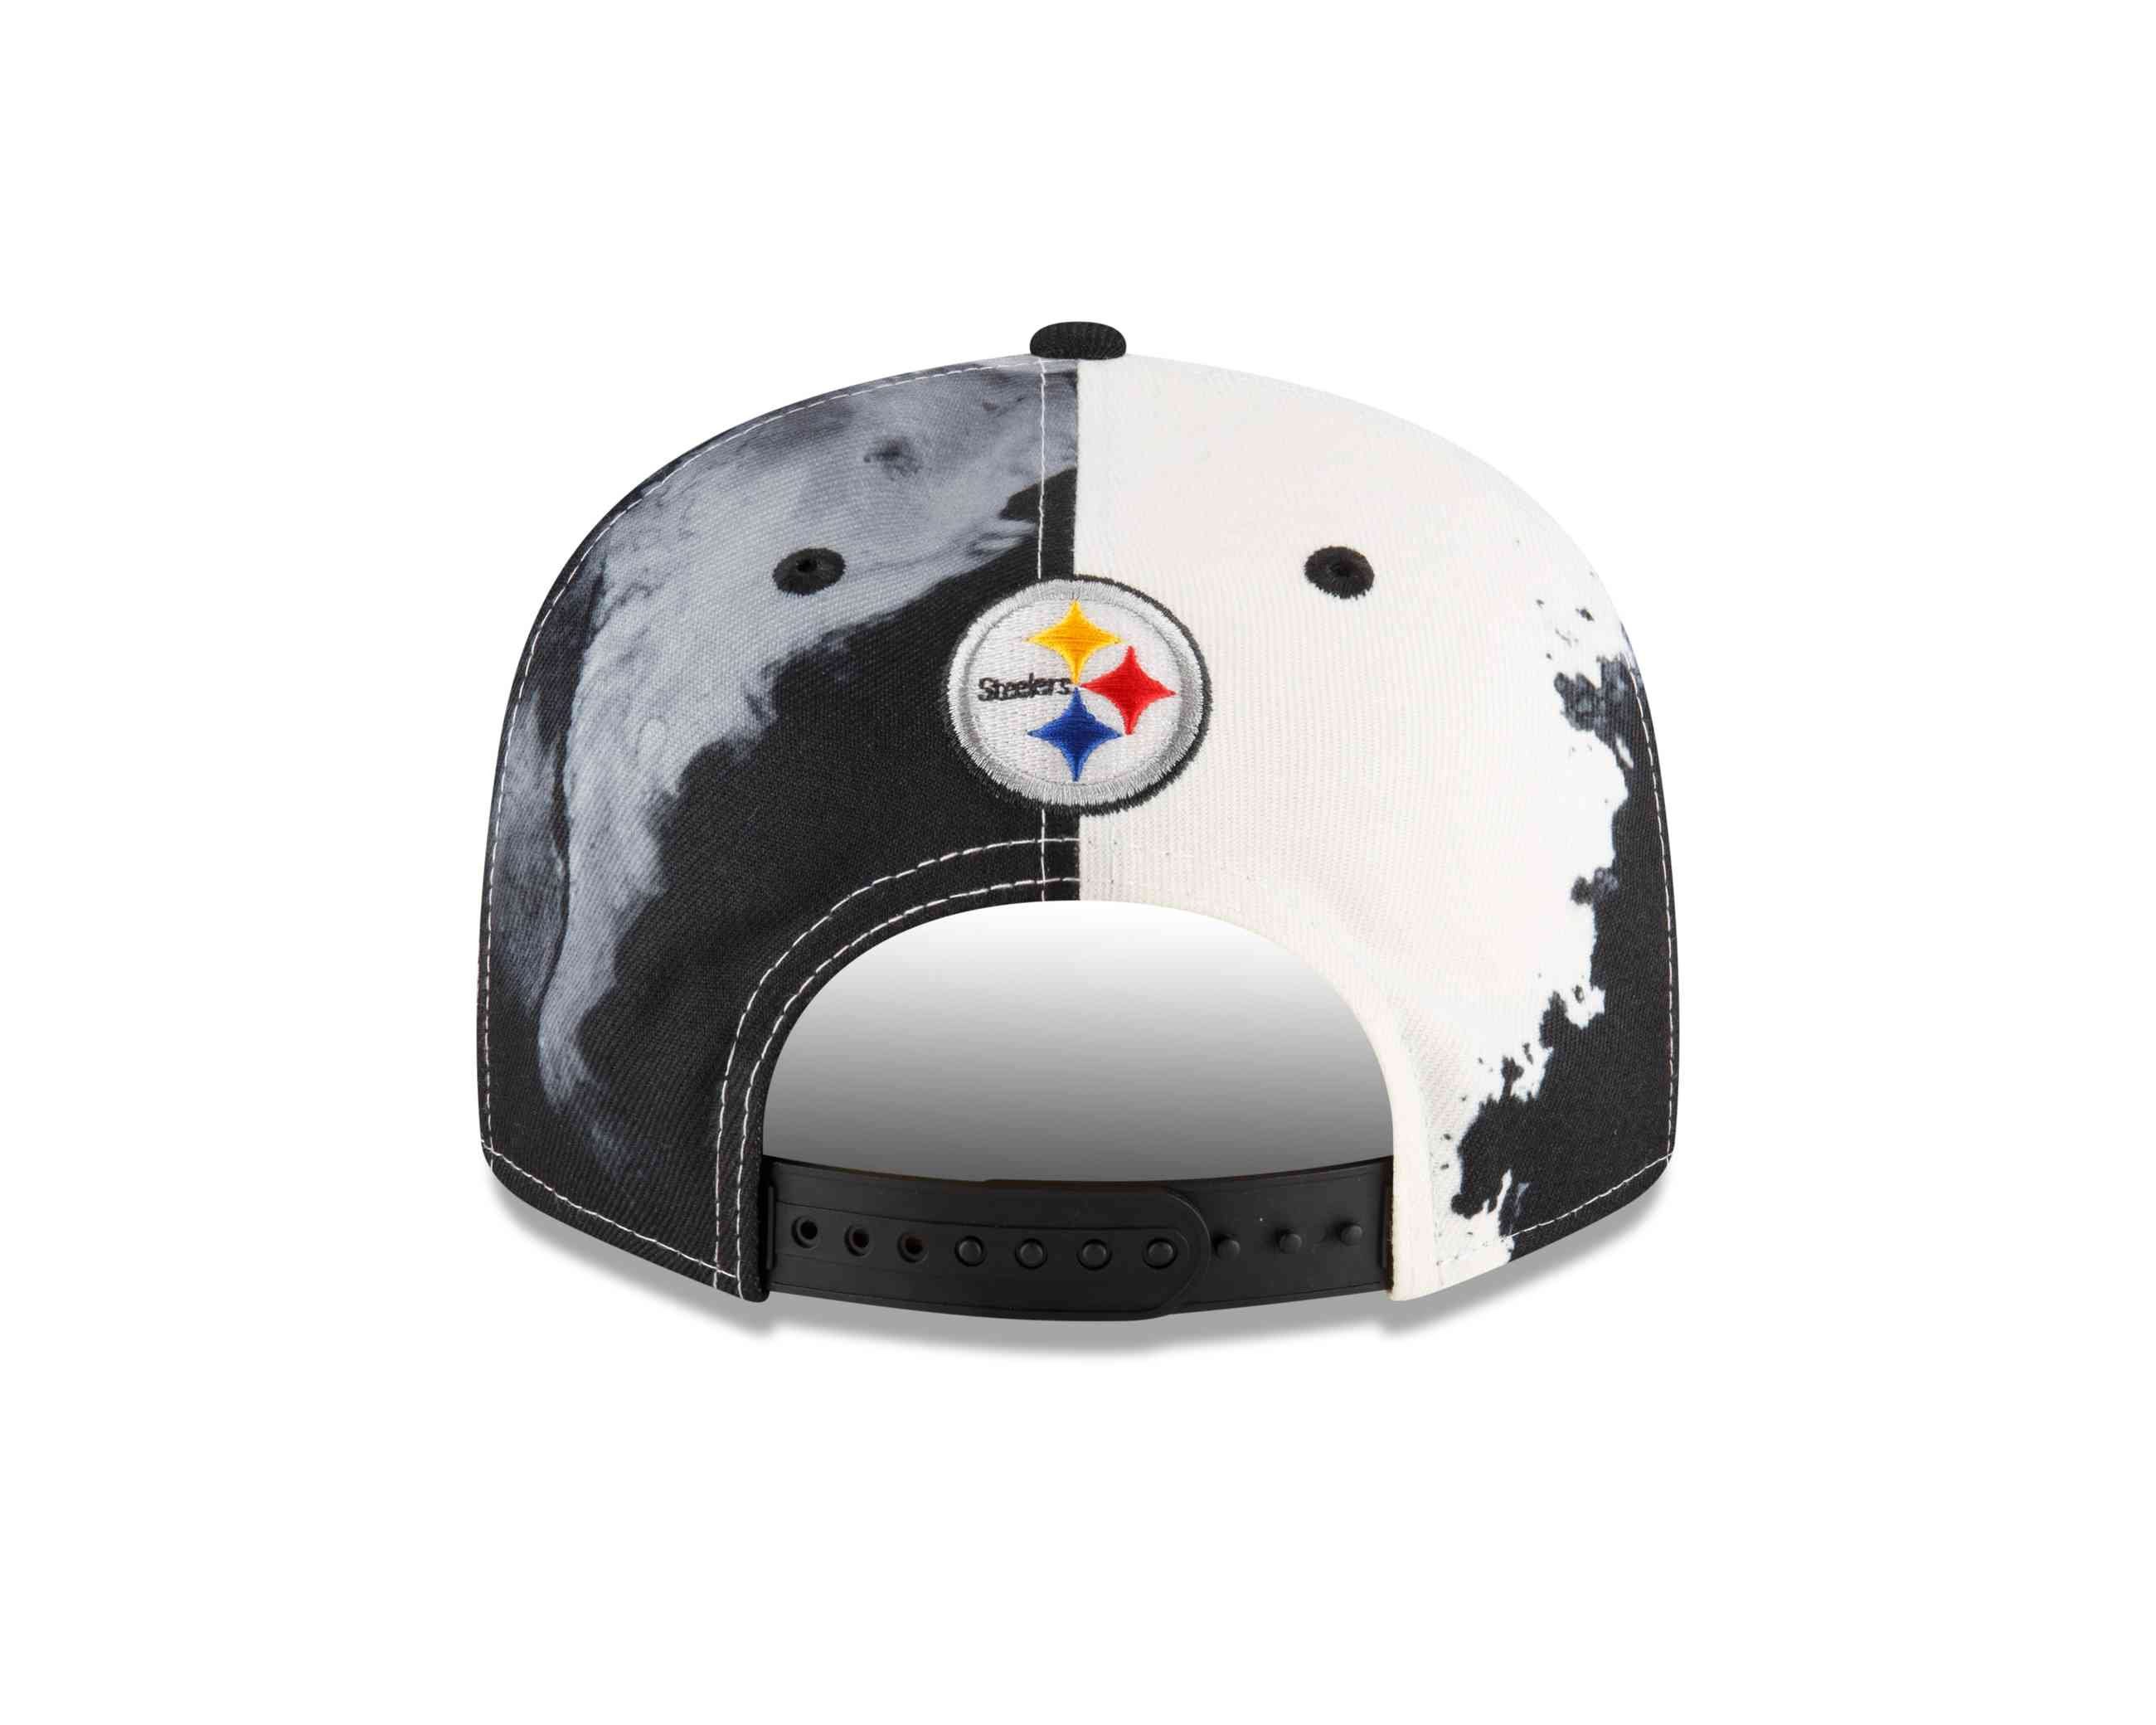 New Ink Steelers Sideline NFL Era 2022 9Fifty Pittsburgh Snapback Cap